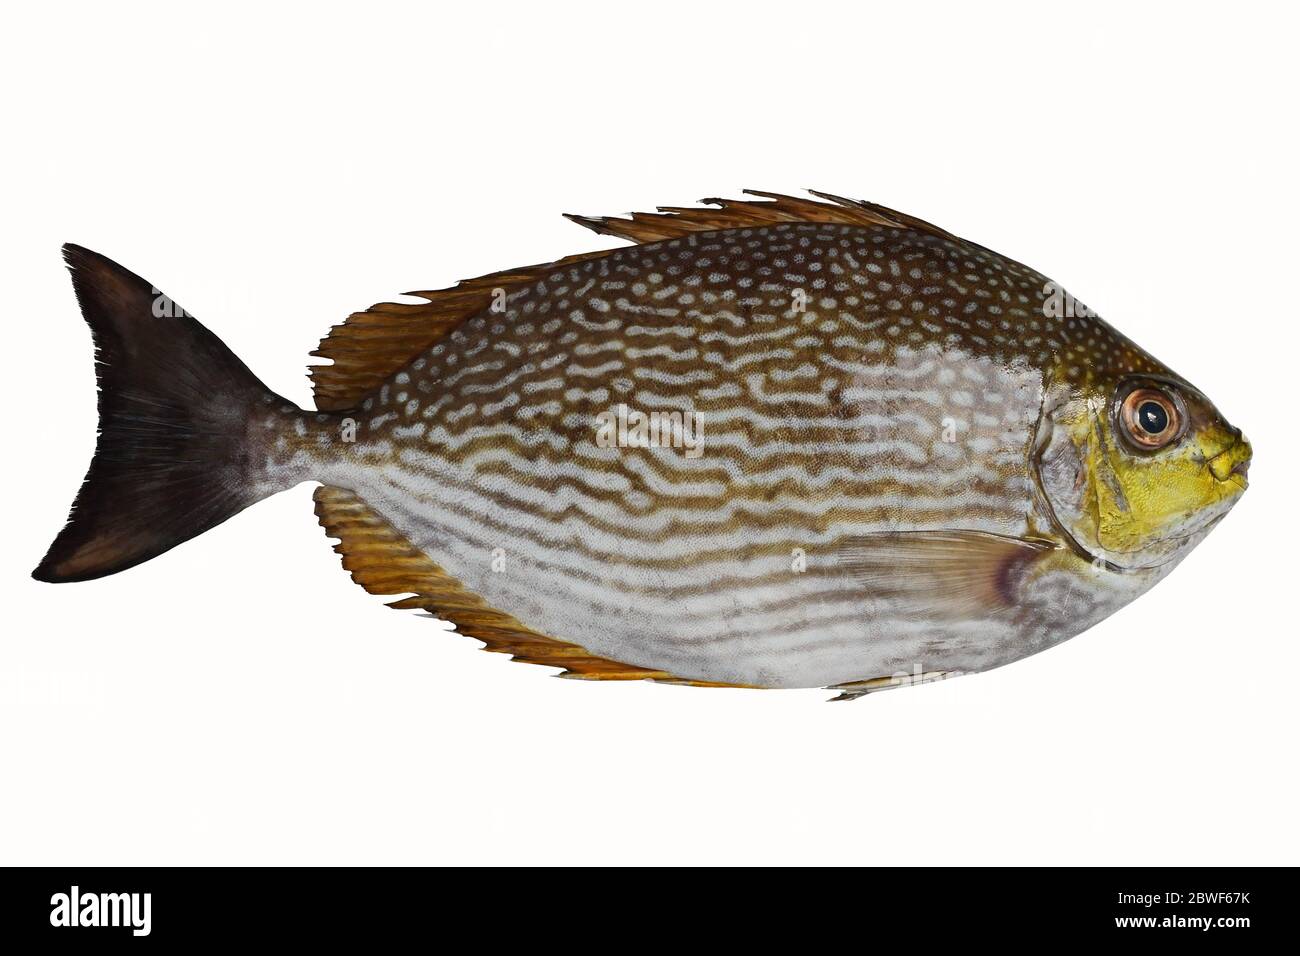 Primo piano pesce coniglio Java o pesce spinefoot Bluespotato o striato ( Siganus javus ) isolato su sfondo bianco Foto Stock